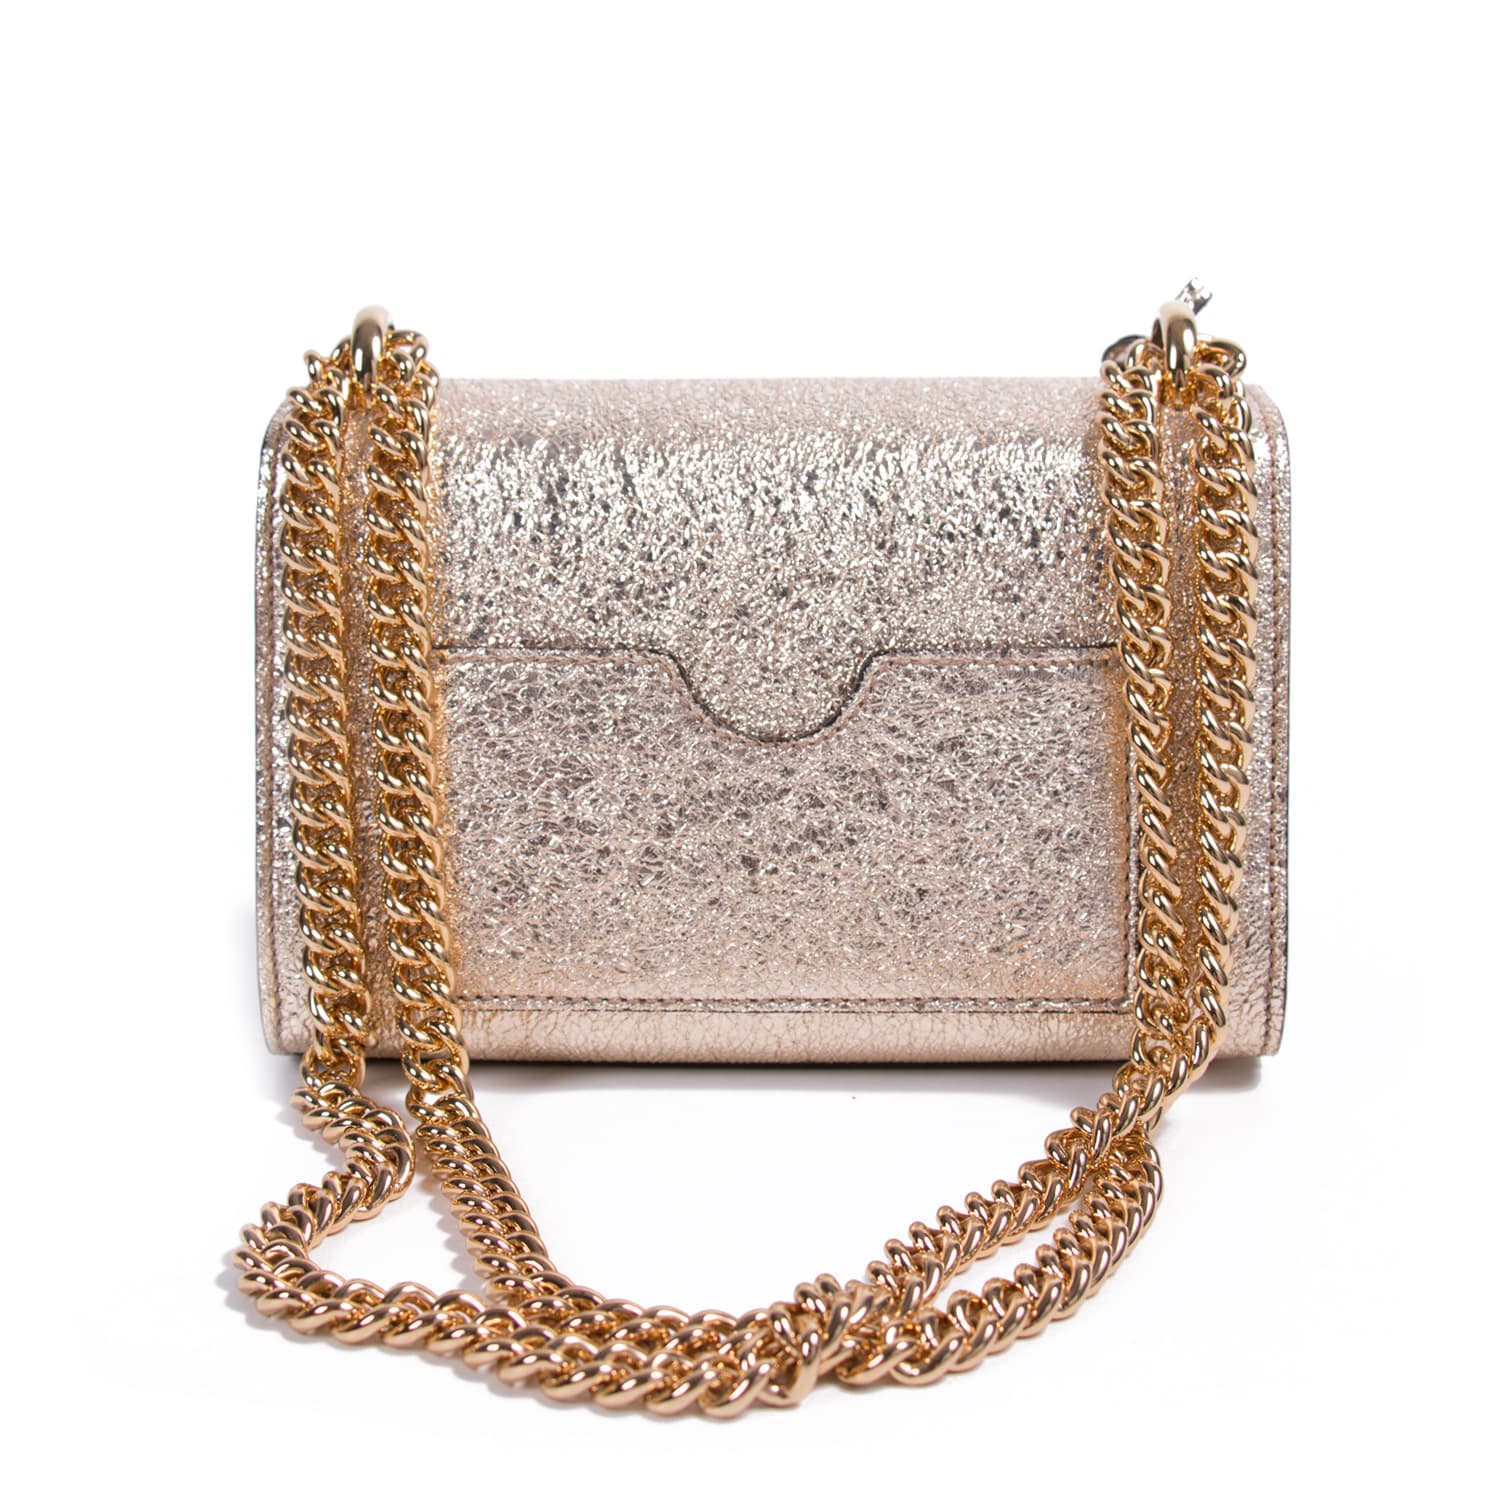 Gucci Metallic Gold Leather Padlock Chain Shoulder Bag